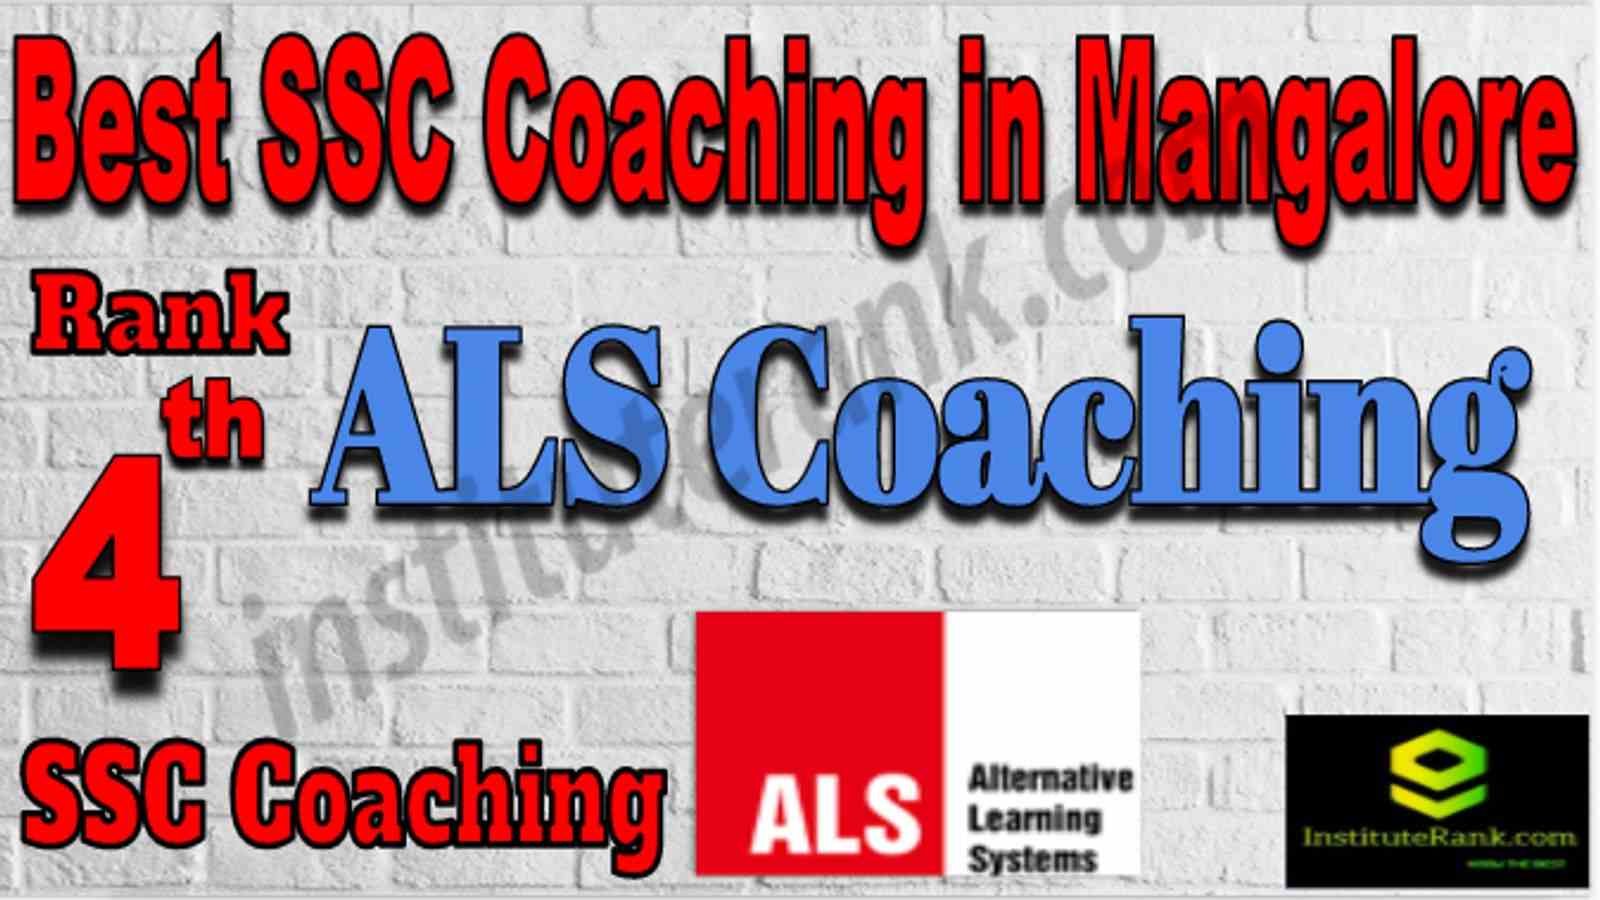 Rank 4 Best SSC Coaching in Mangalore